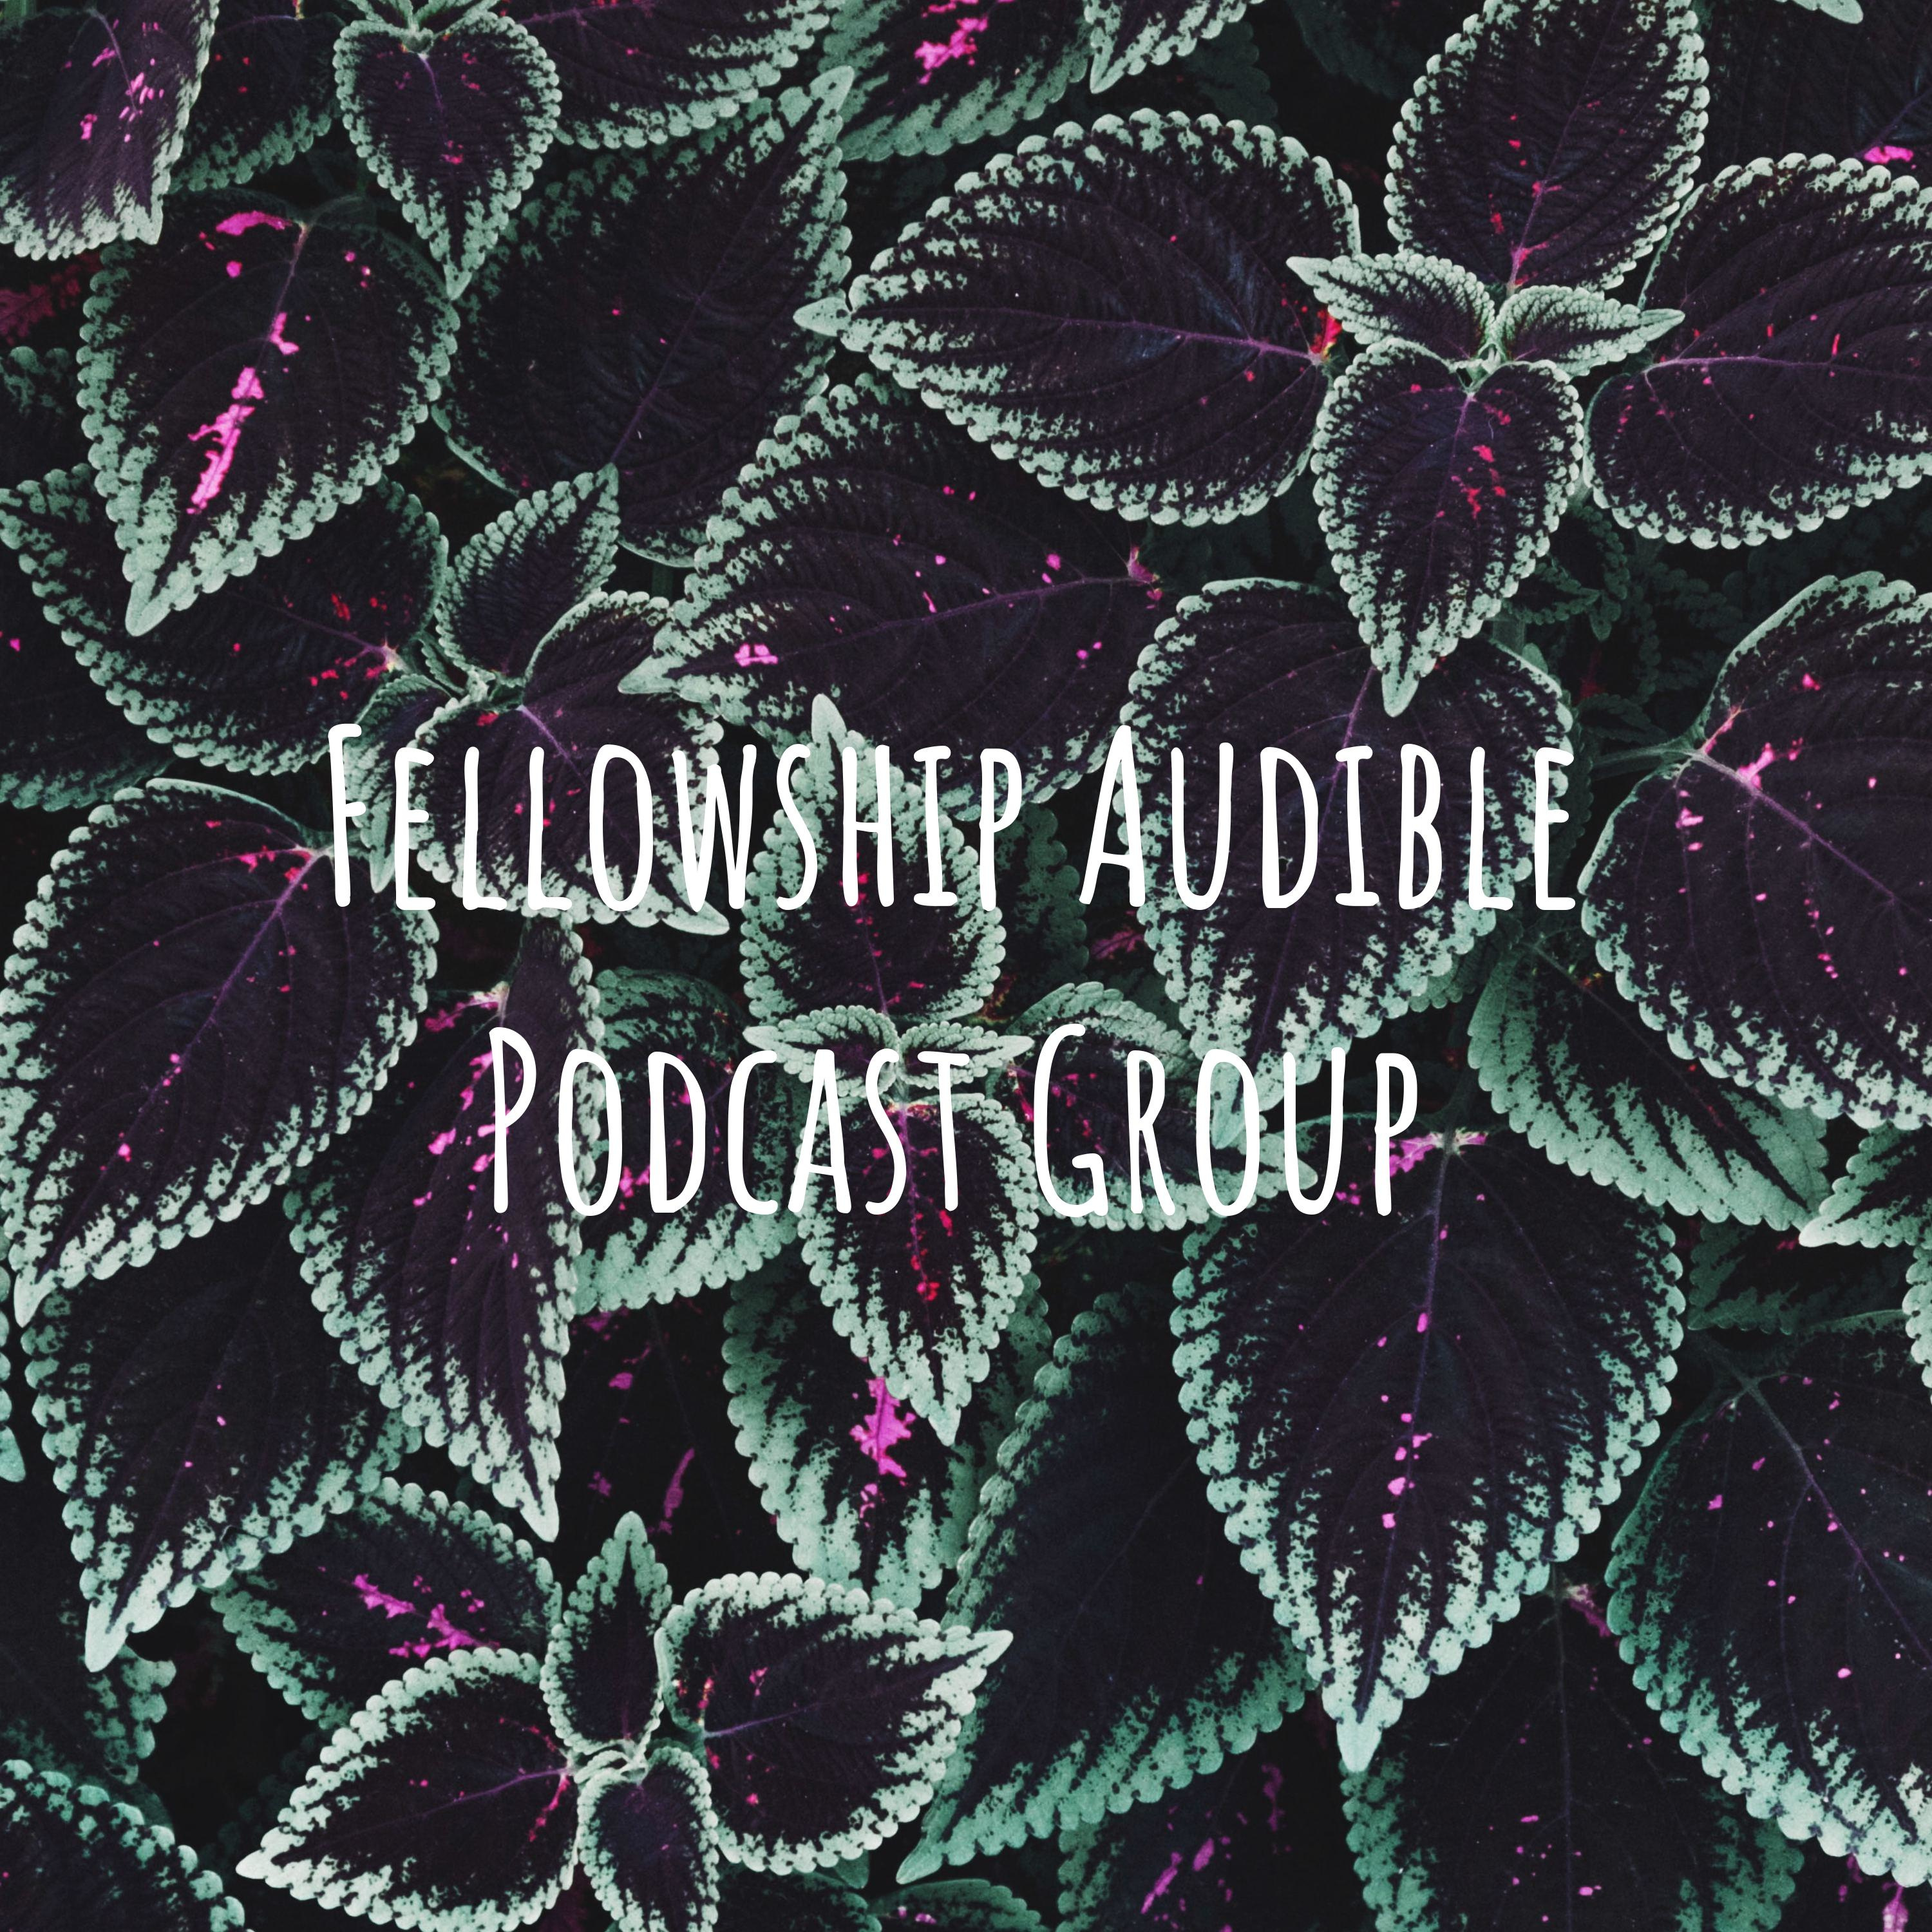 Fellowship Audio Podcast 29MAR19 | Prepared to watch Endgame